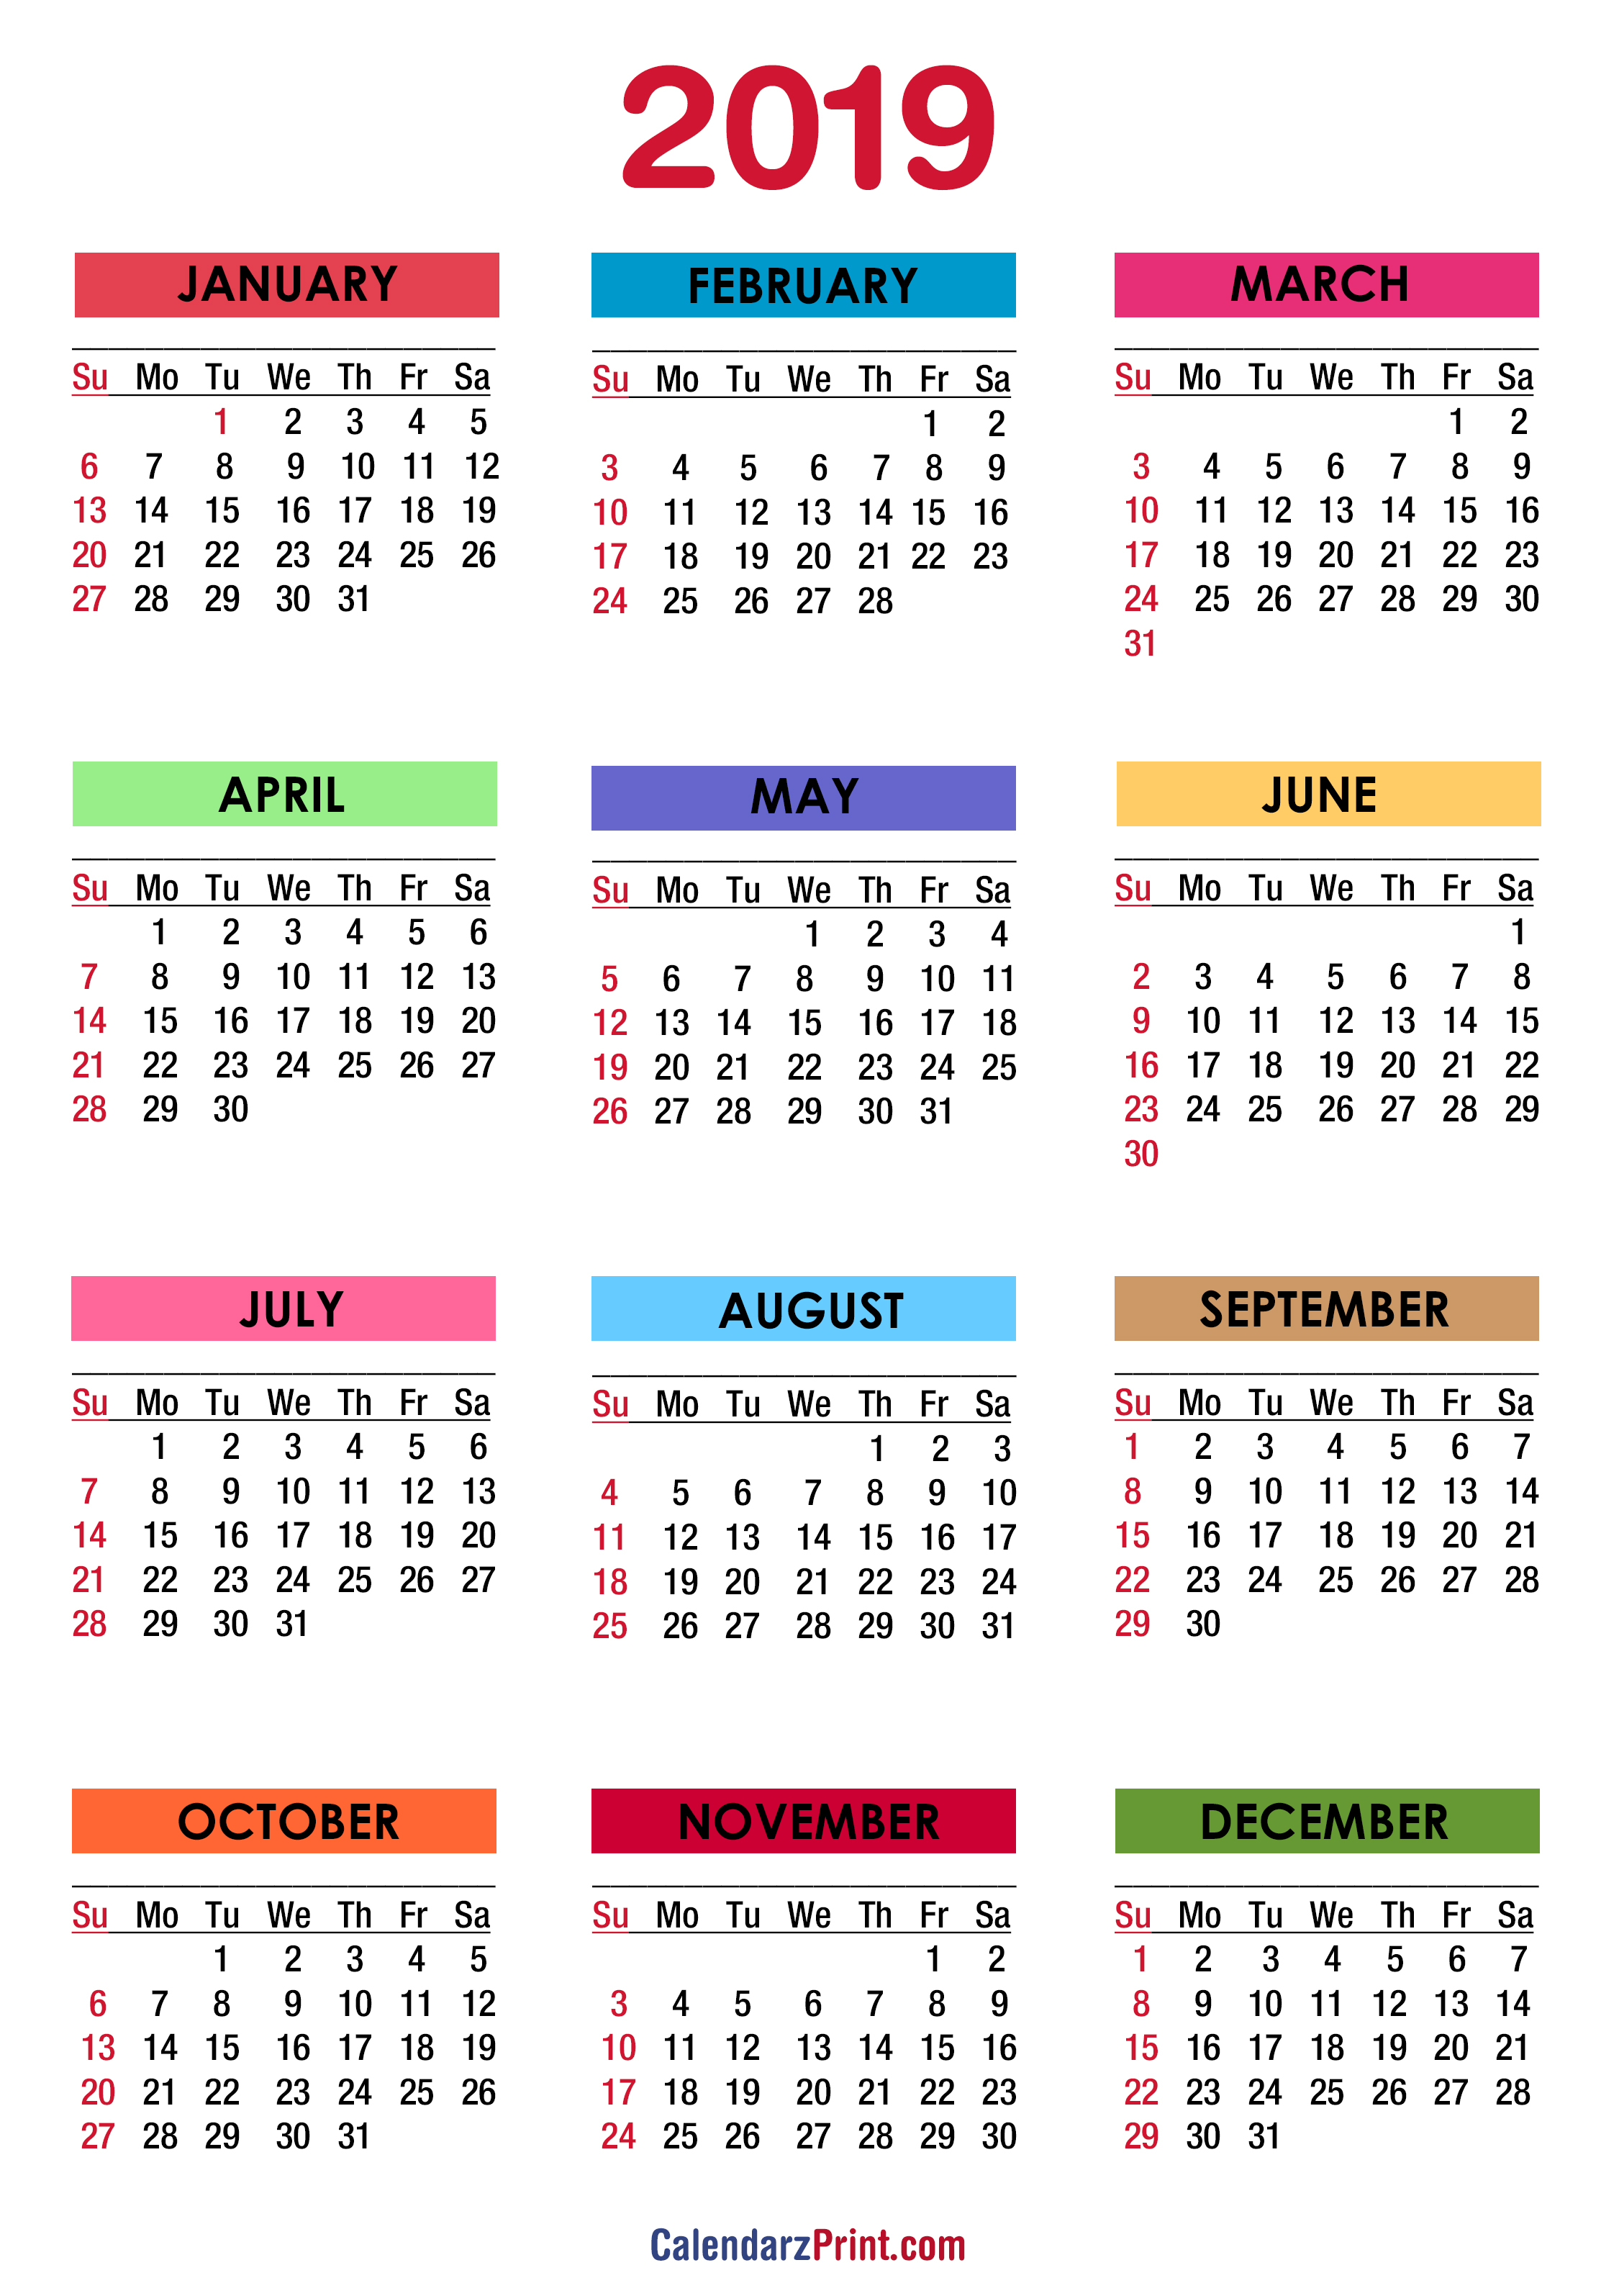 2019 Calendar Colorful White Hd Ss 001 Calendarzprint Free